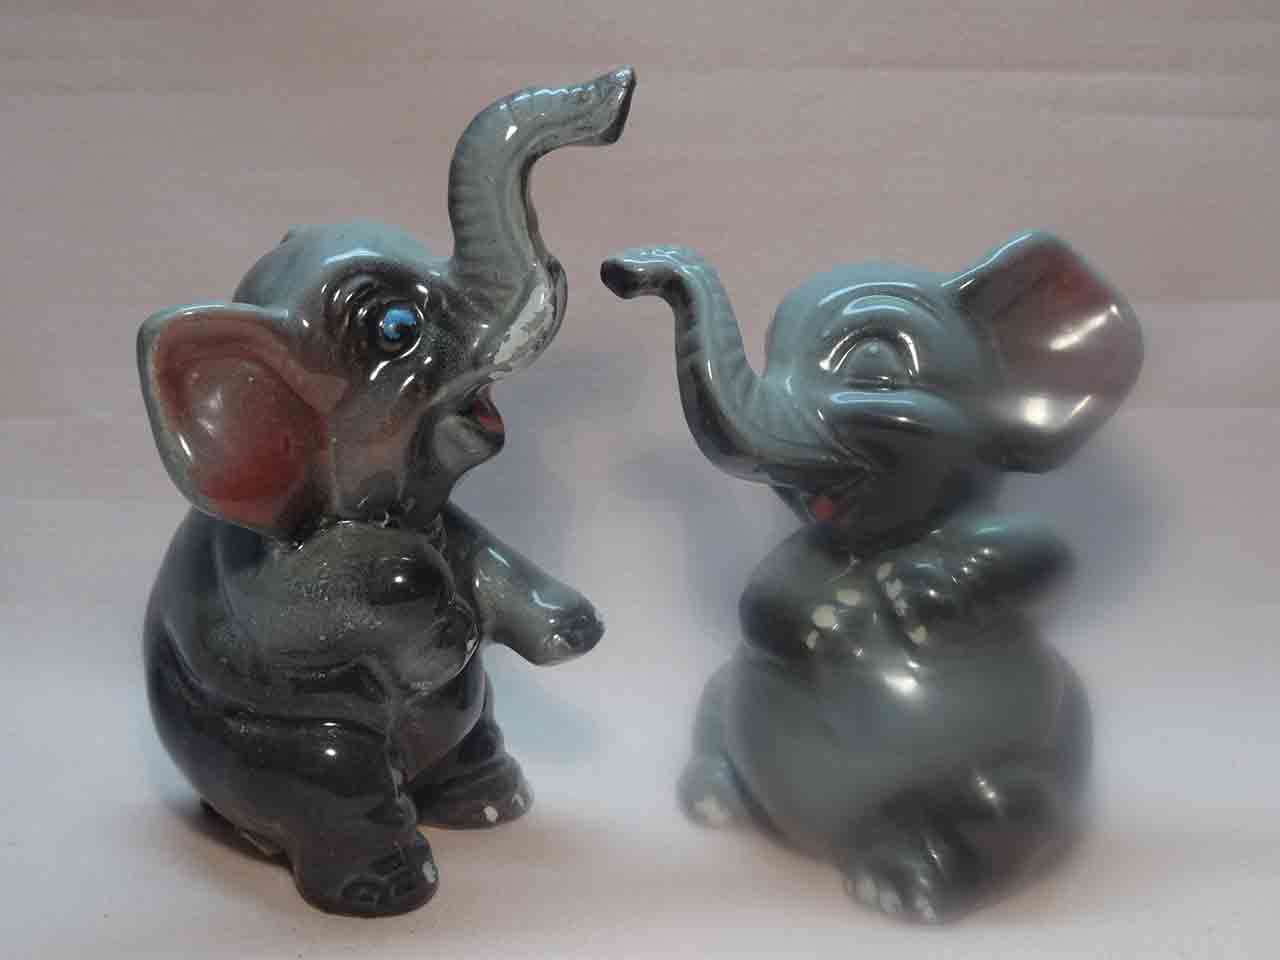 Kreiss animals salt and pepper shakers - elephants